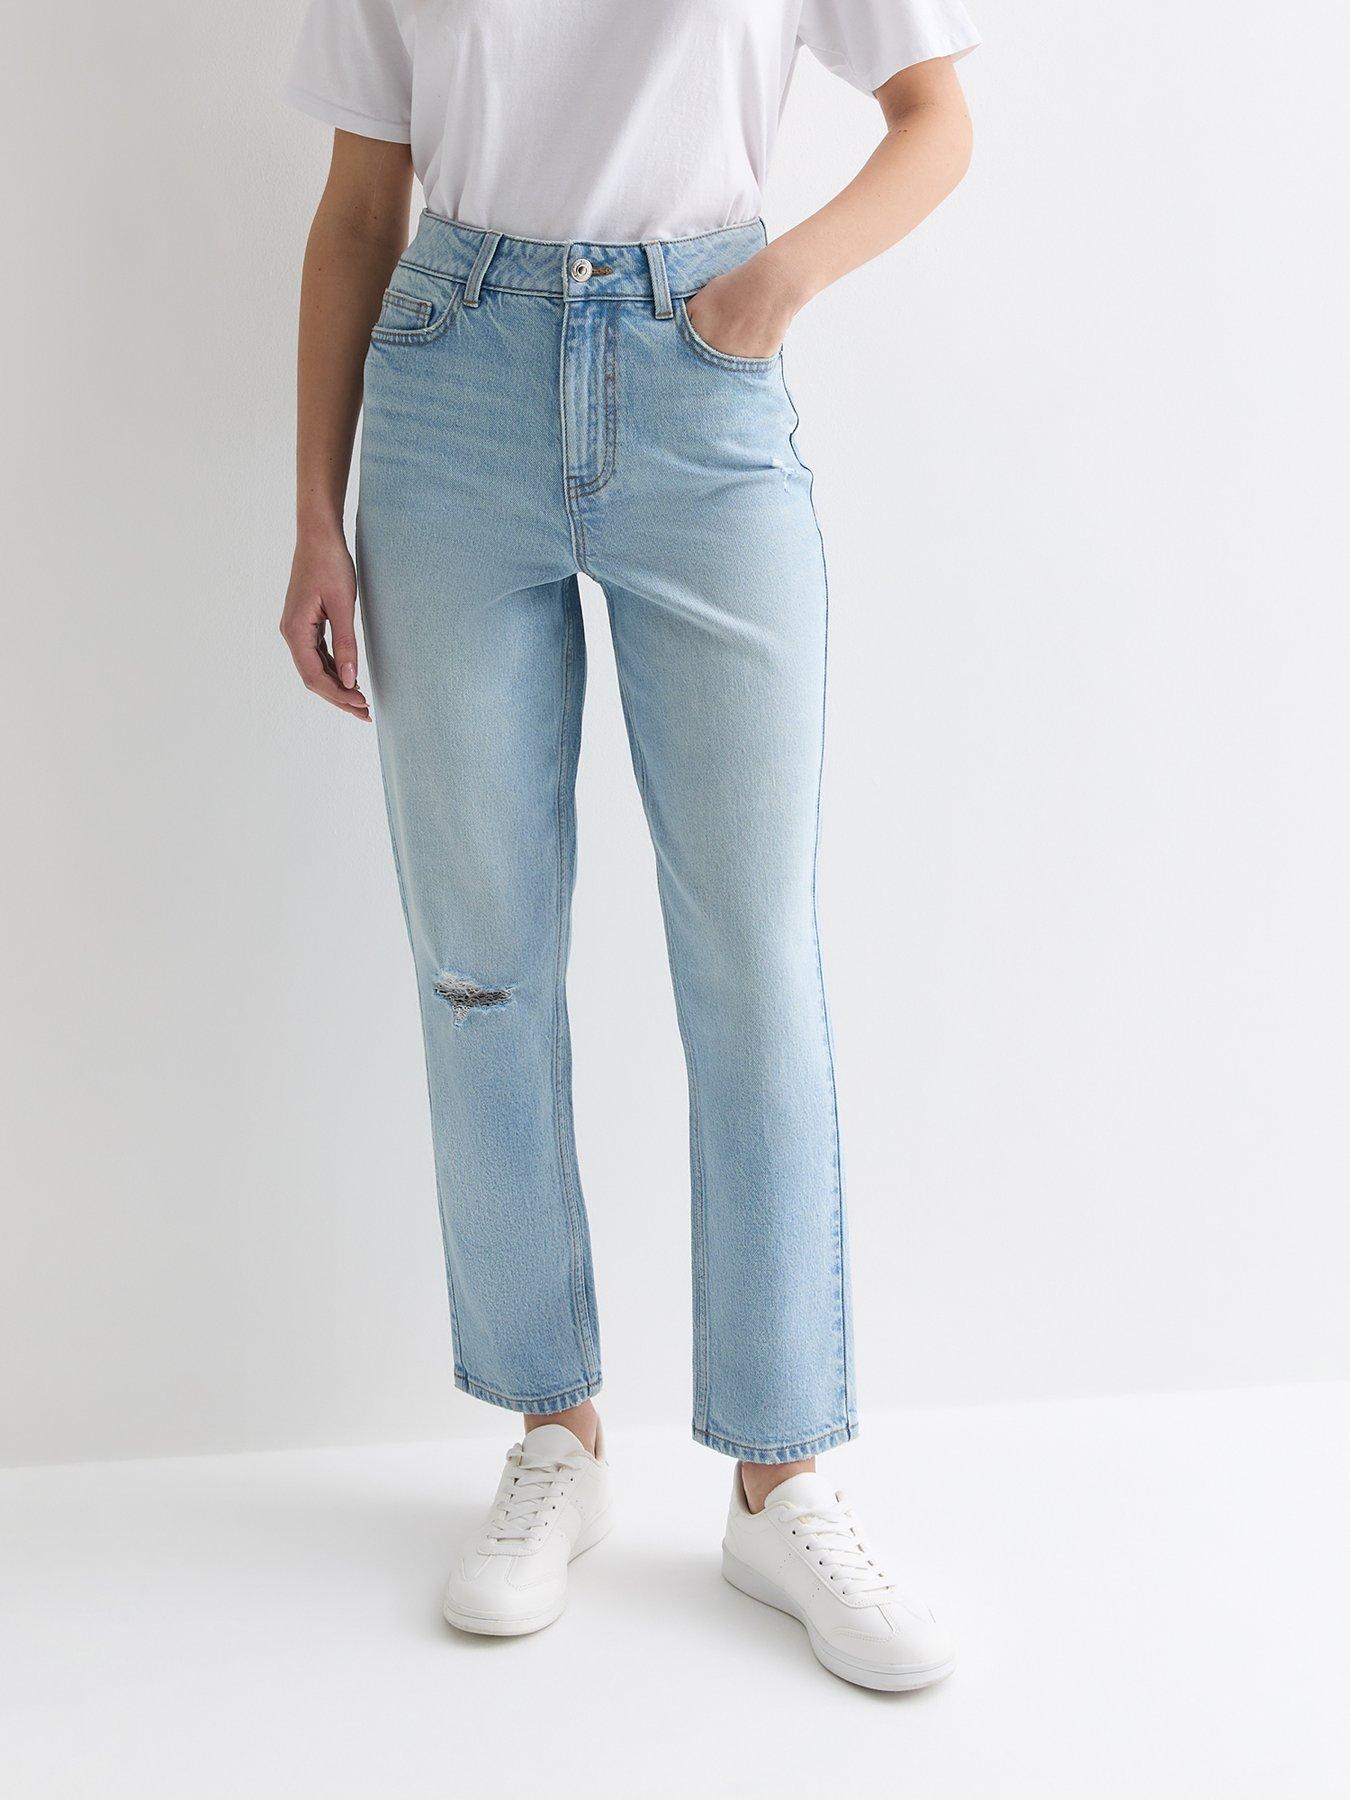 Hot Selling Skinny Jeans Women Shredded Pants High Waist Trousers